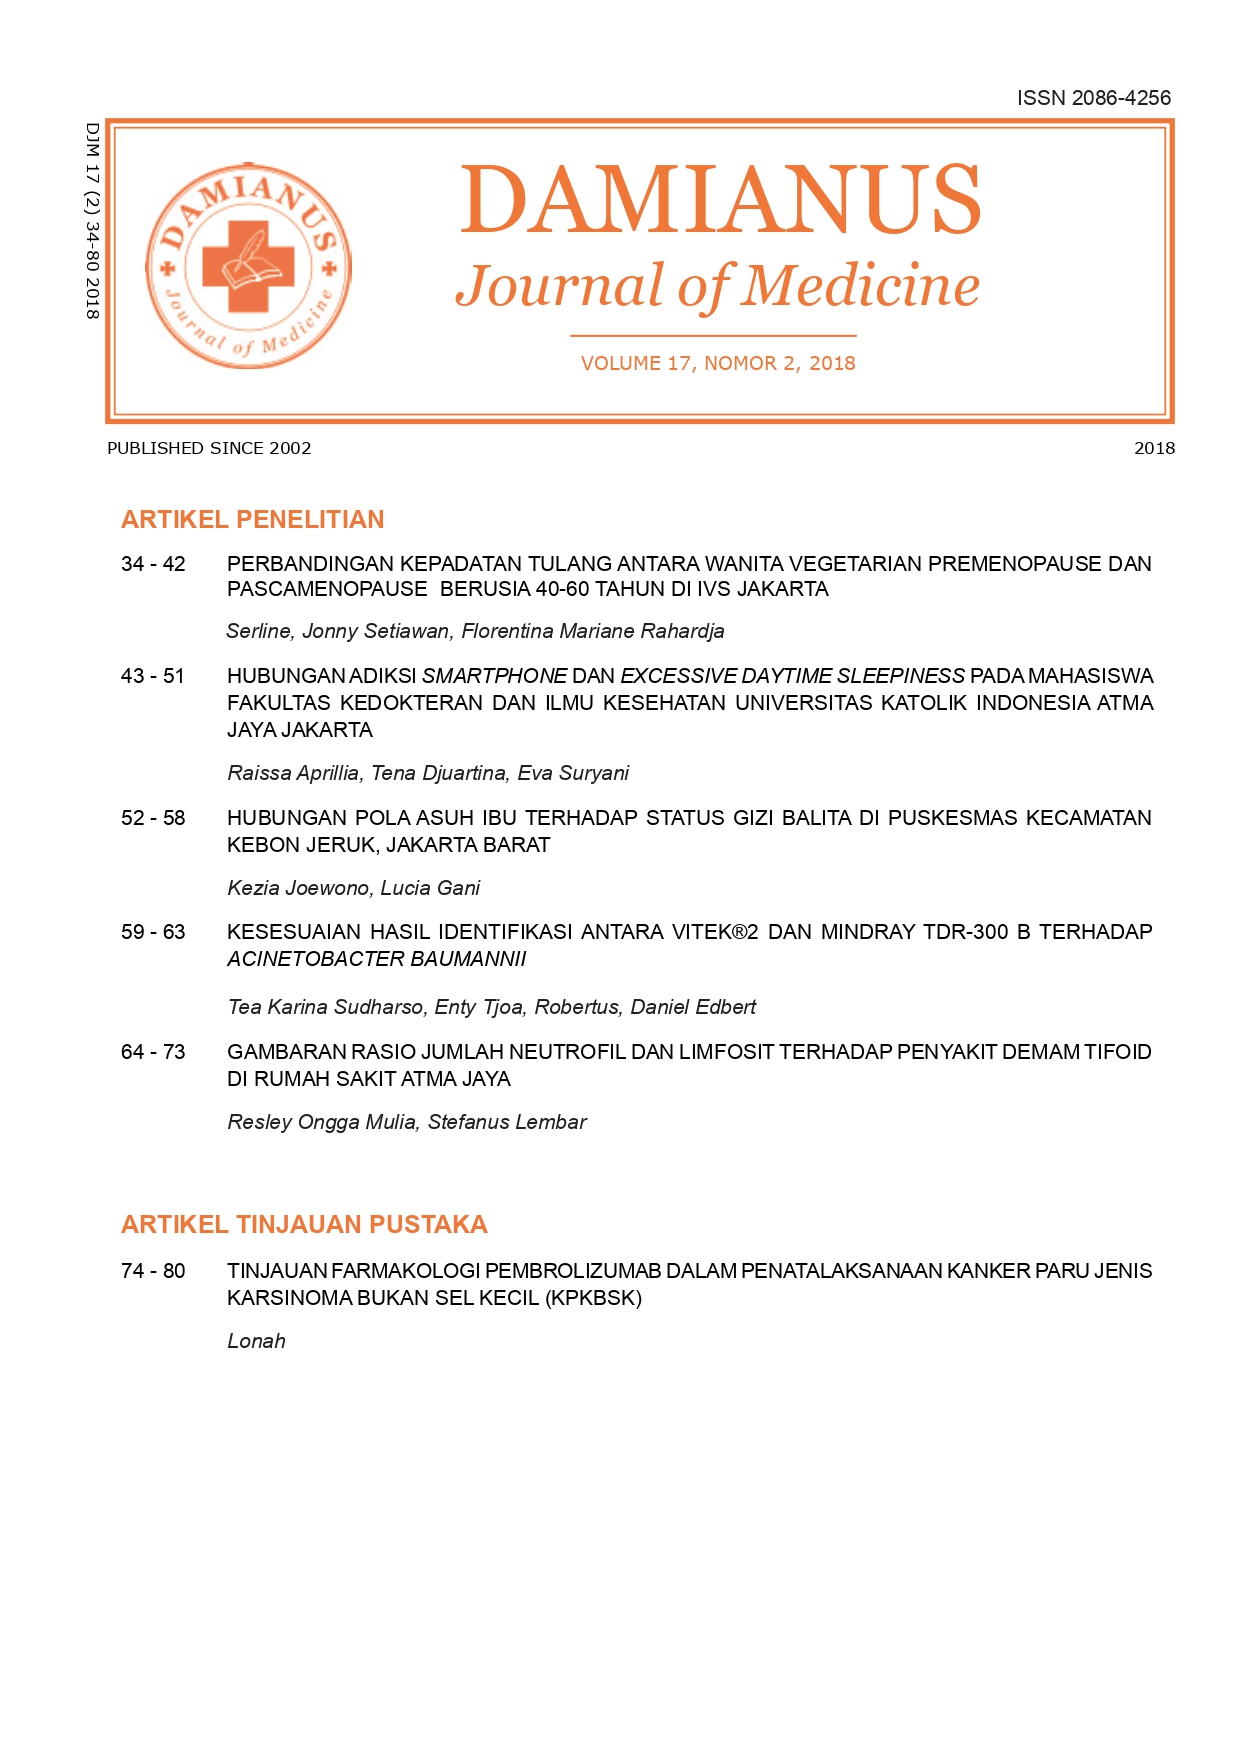 Damianus: Journal of Medicine